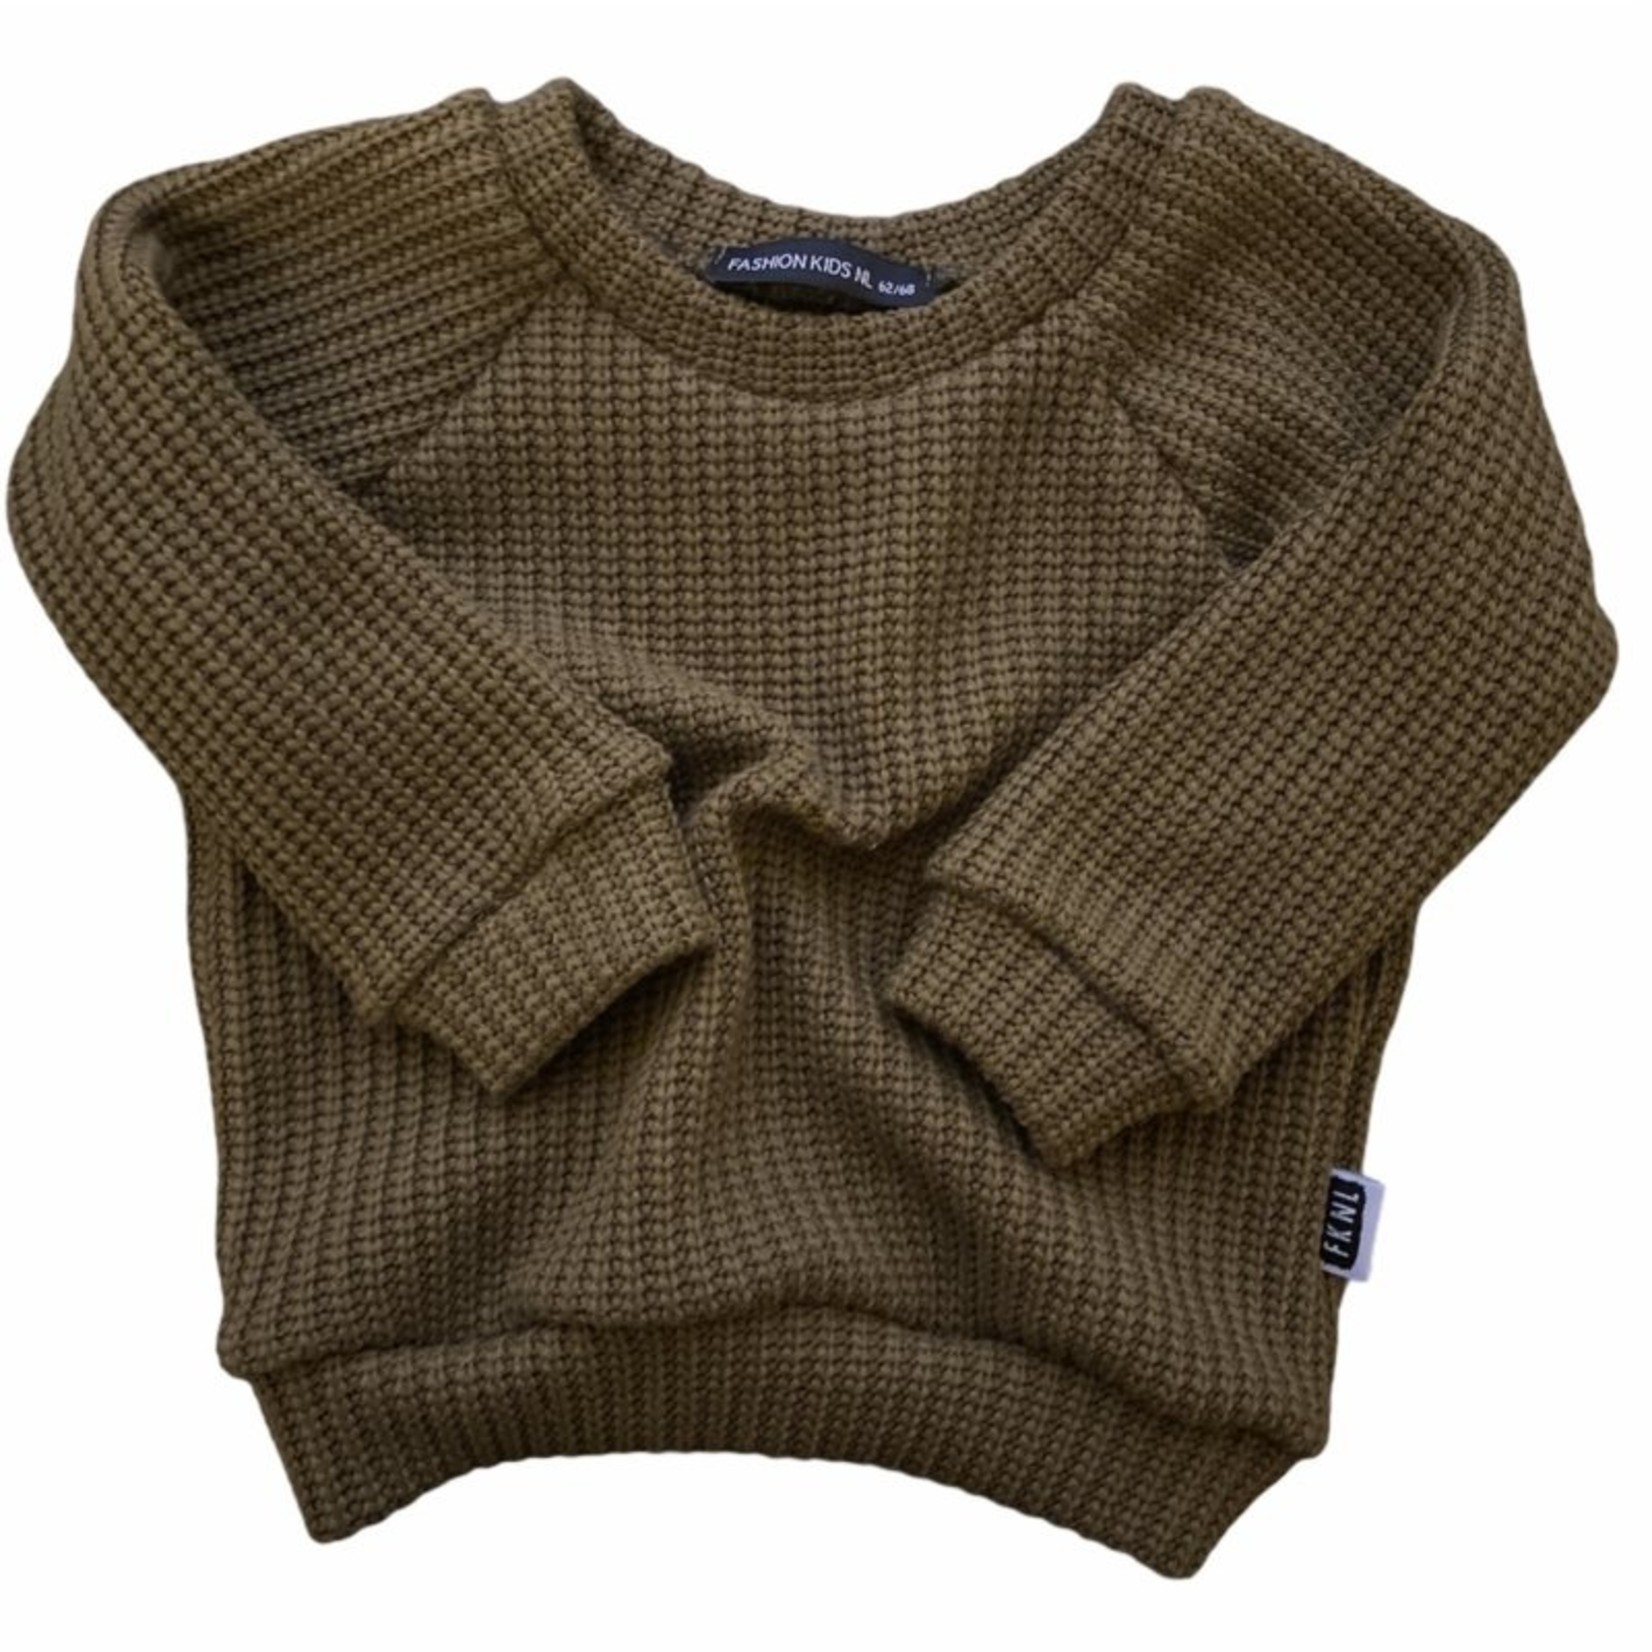 Fashion Kids  Knit sweater olijfgroen